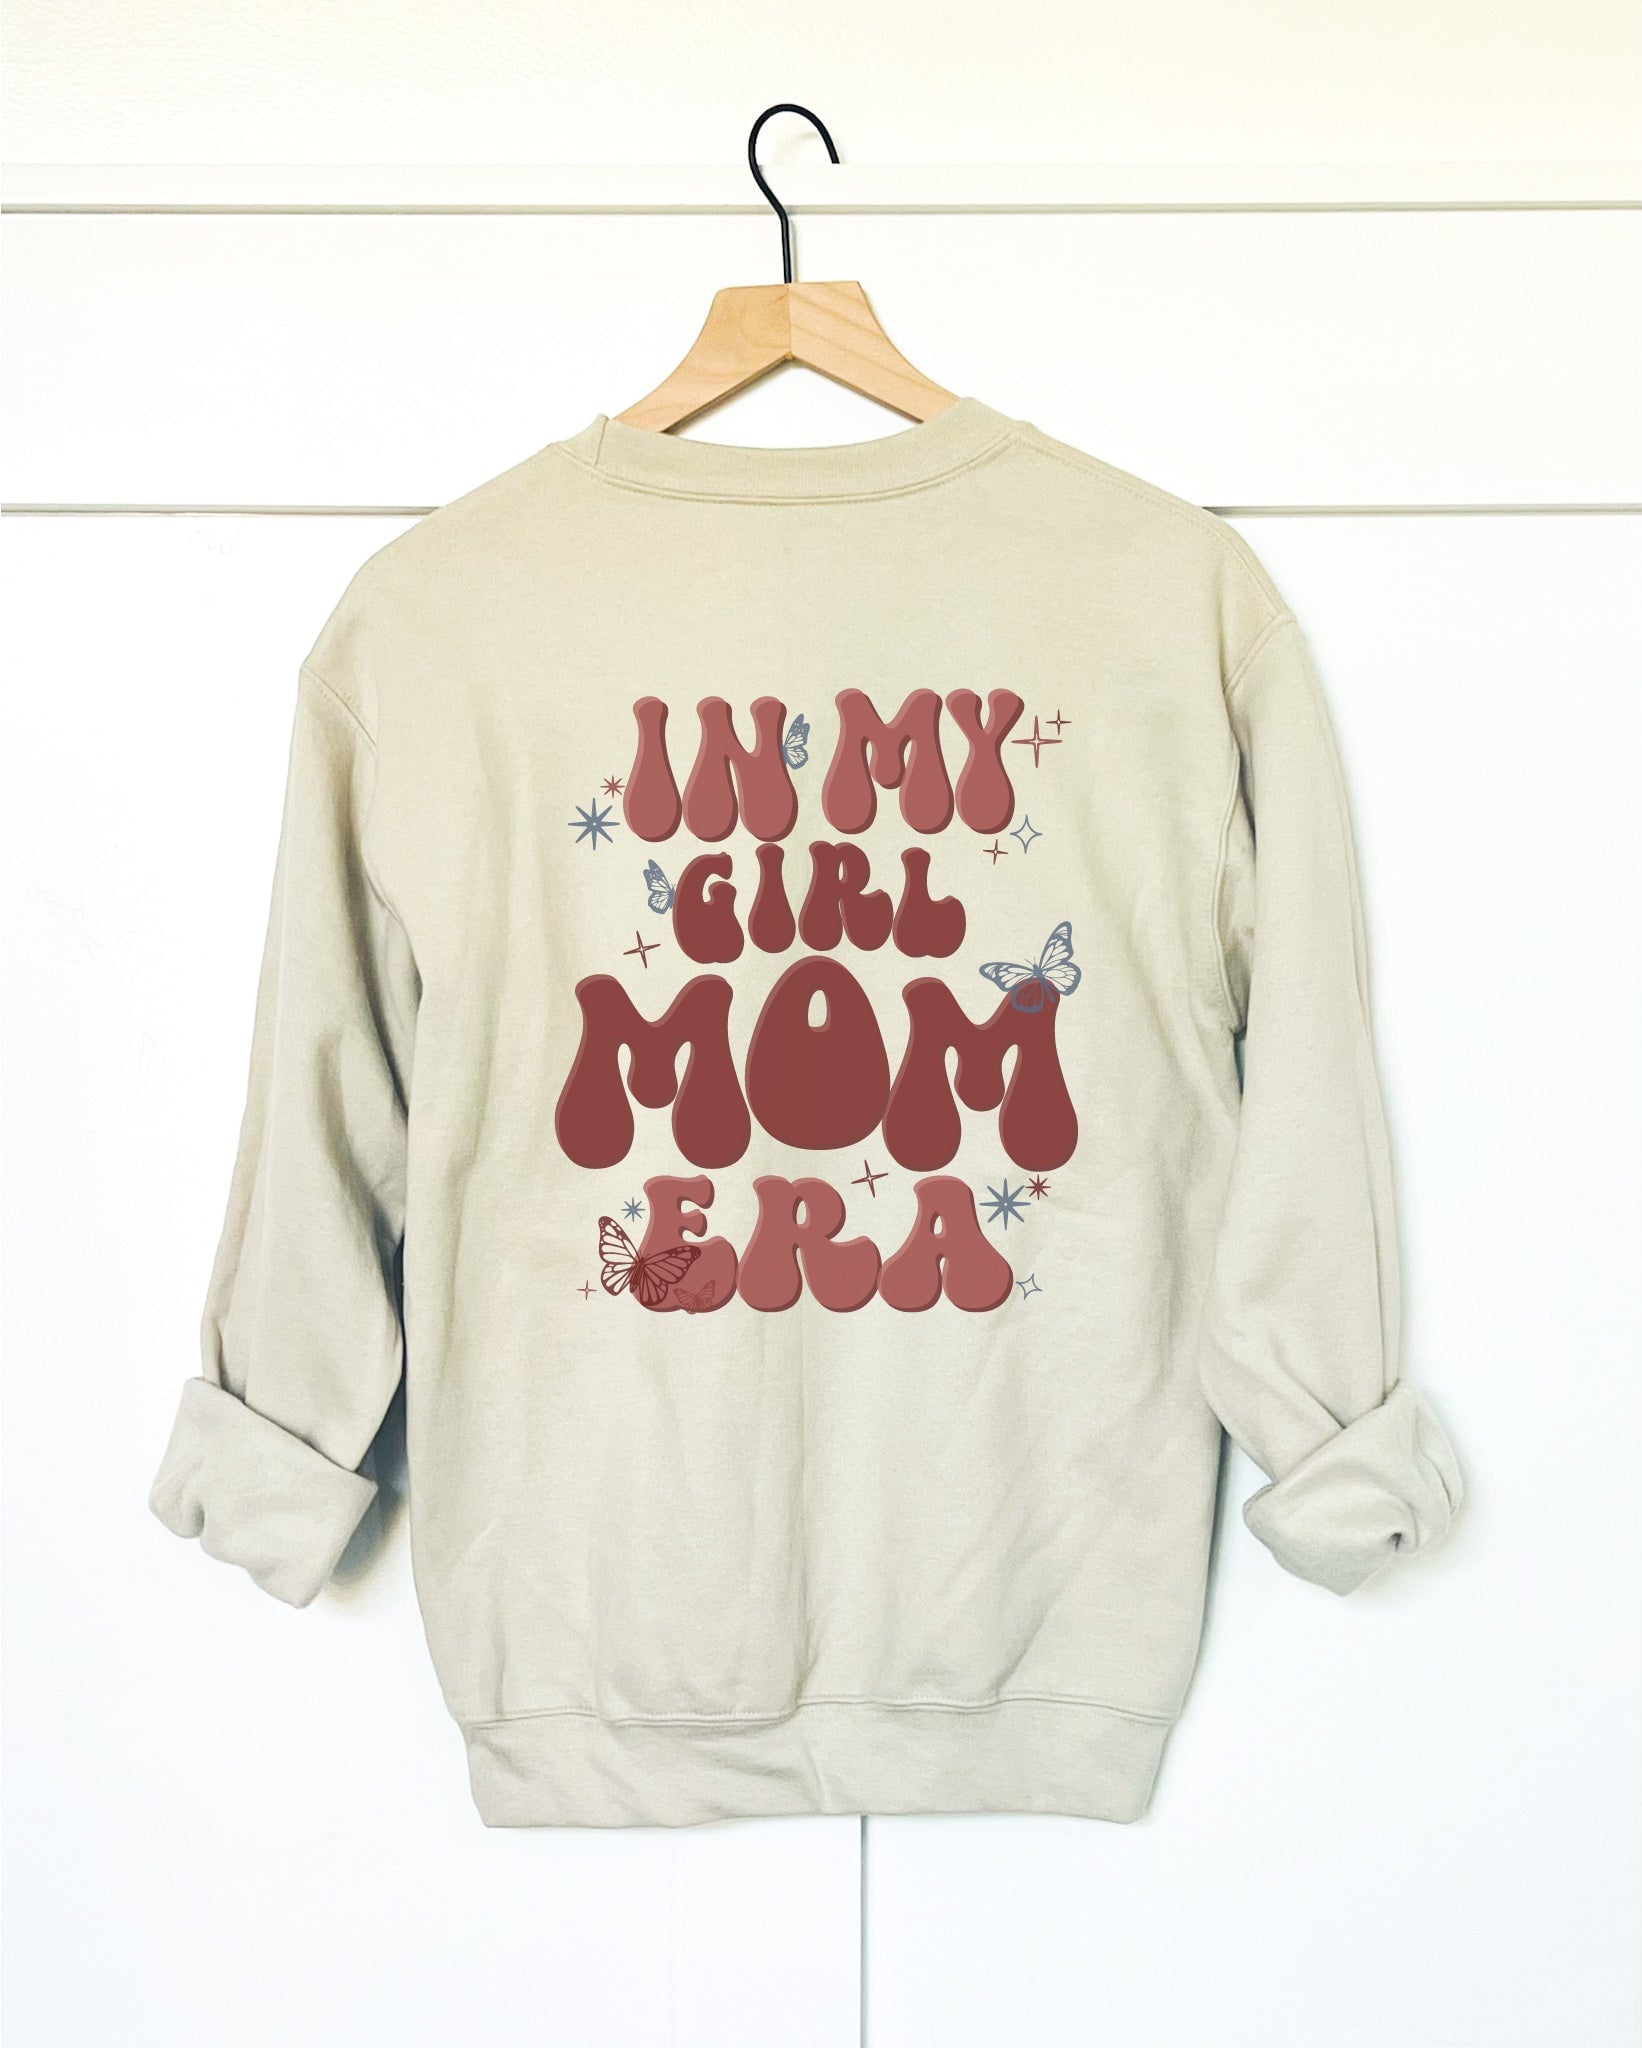 In my girl mom era back print basic sweatshirt Mom collection Gildan 18000 sweatshirt 